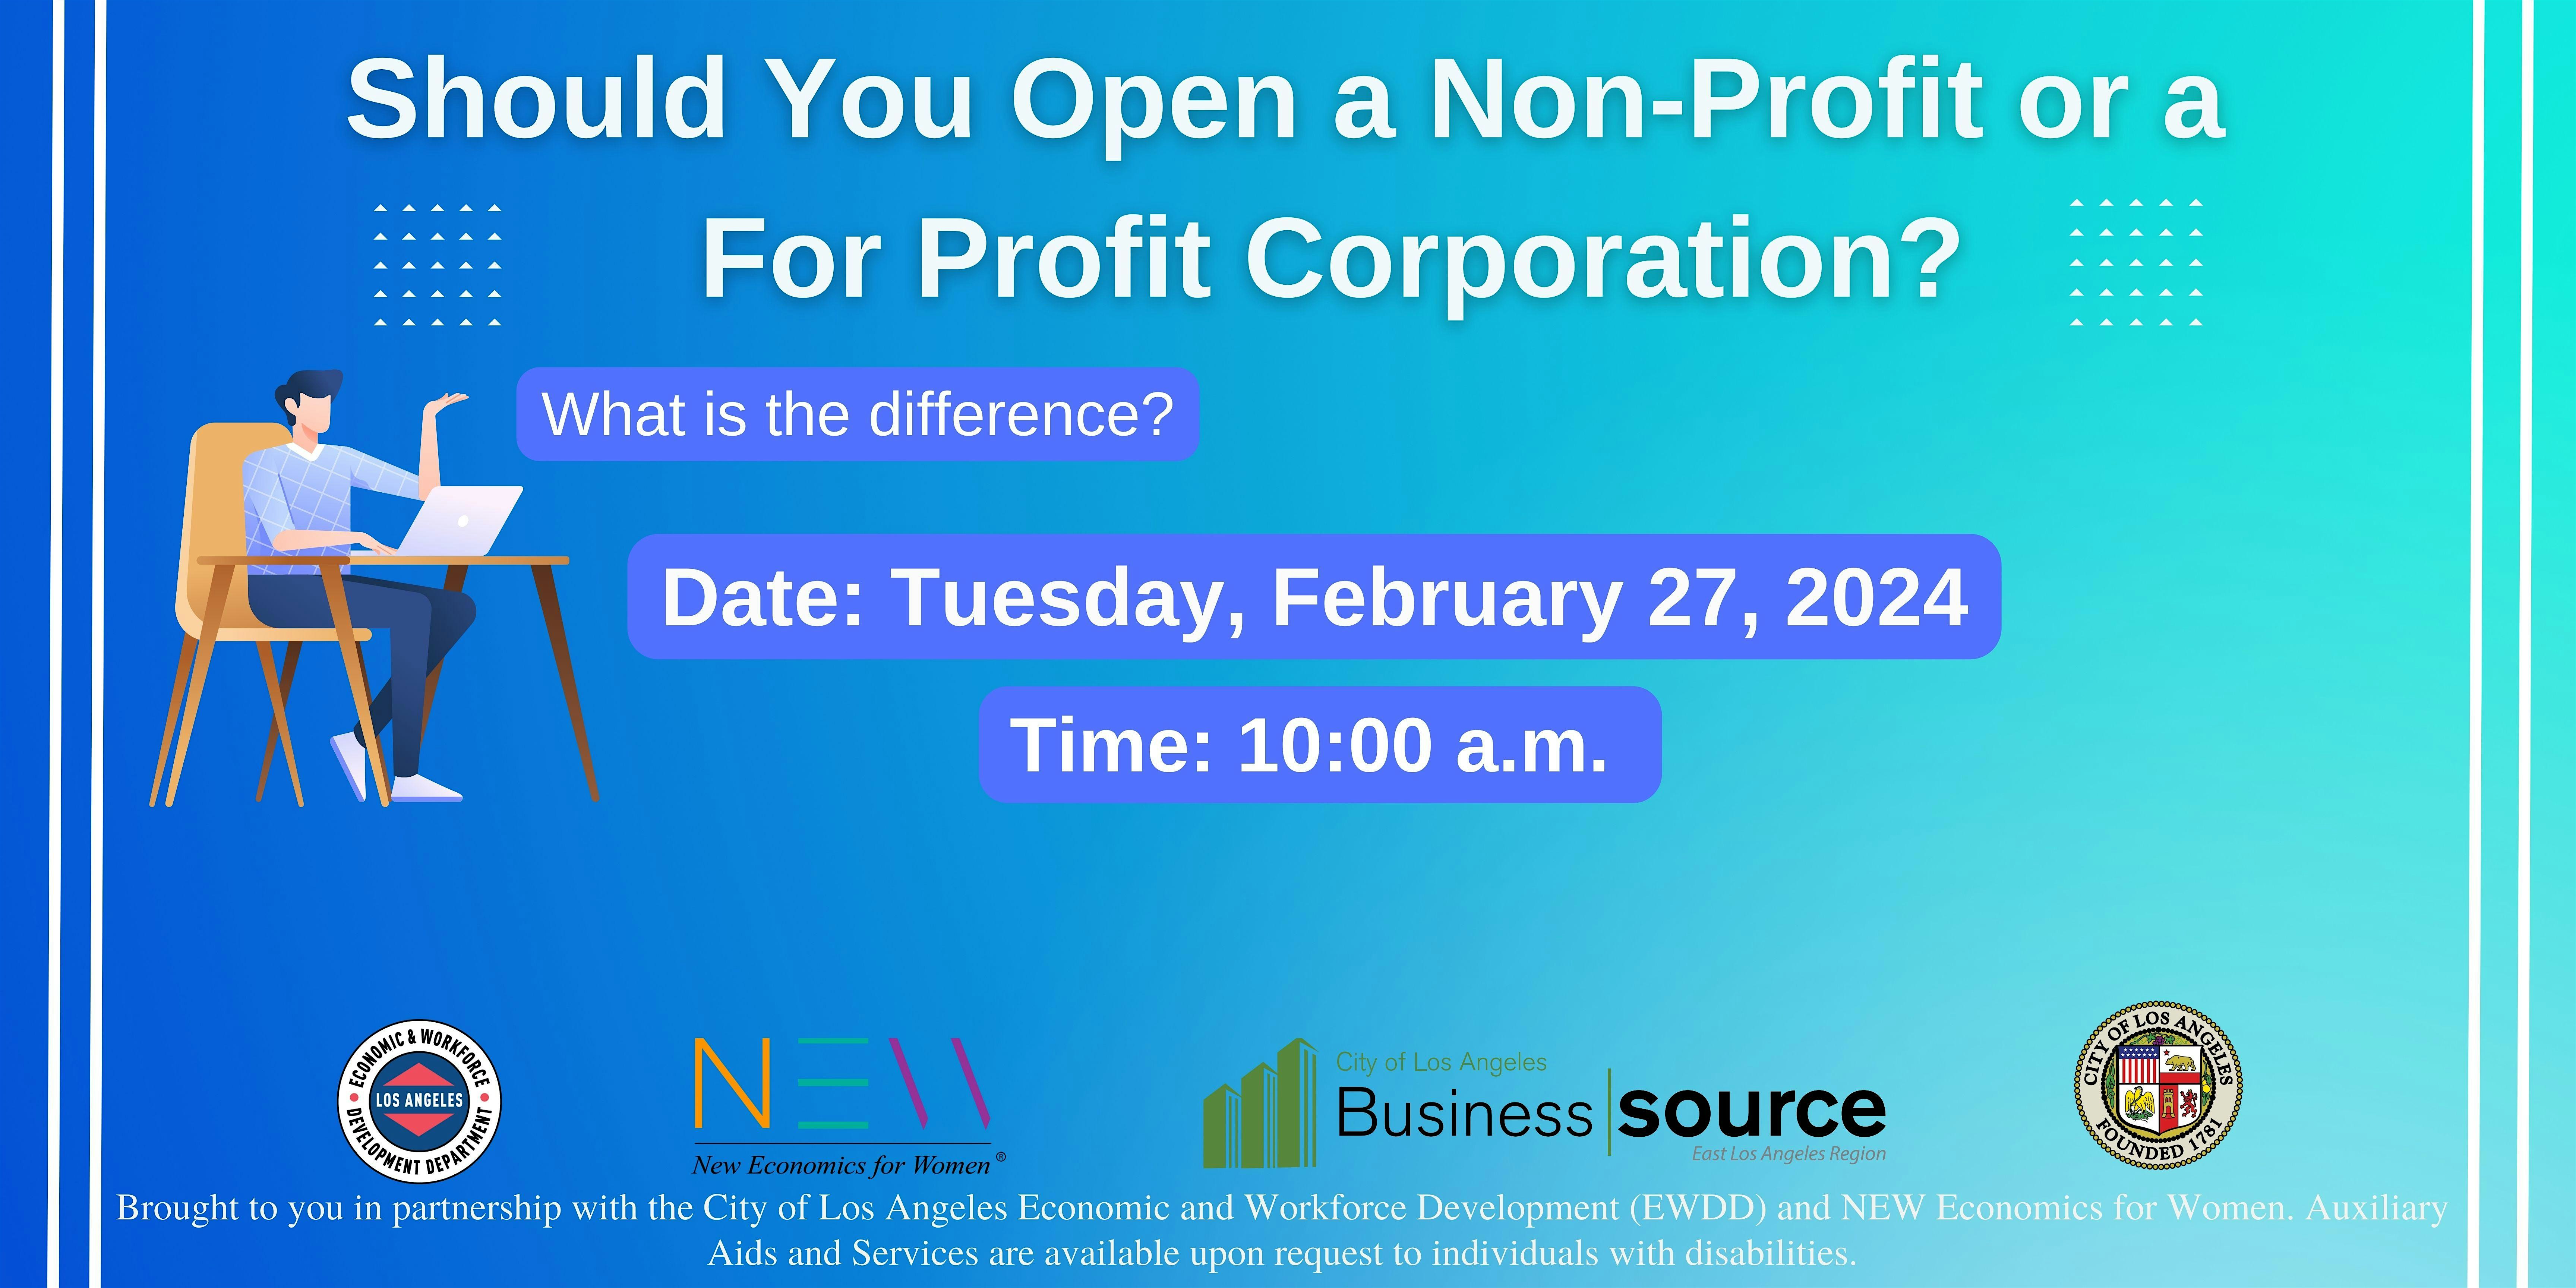 Should You Open a Non-Profit or a For Profit Corporation?